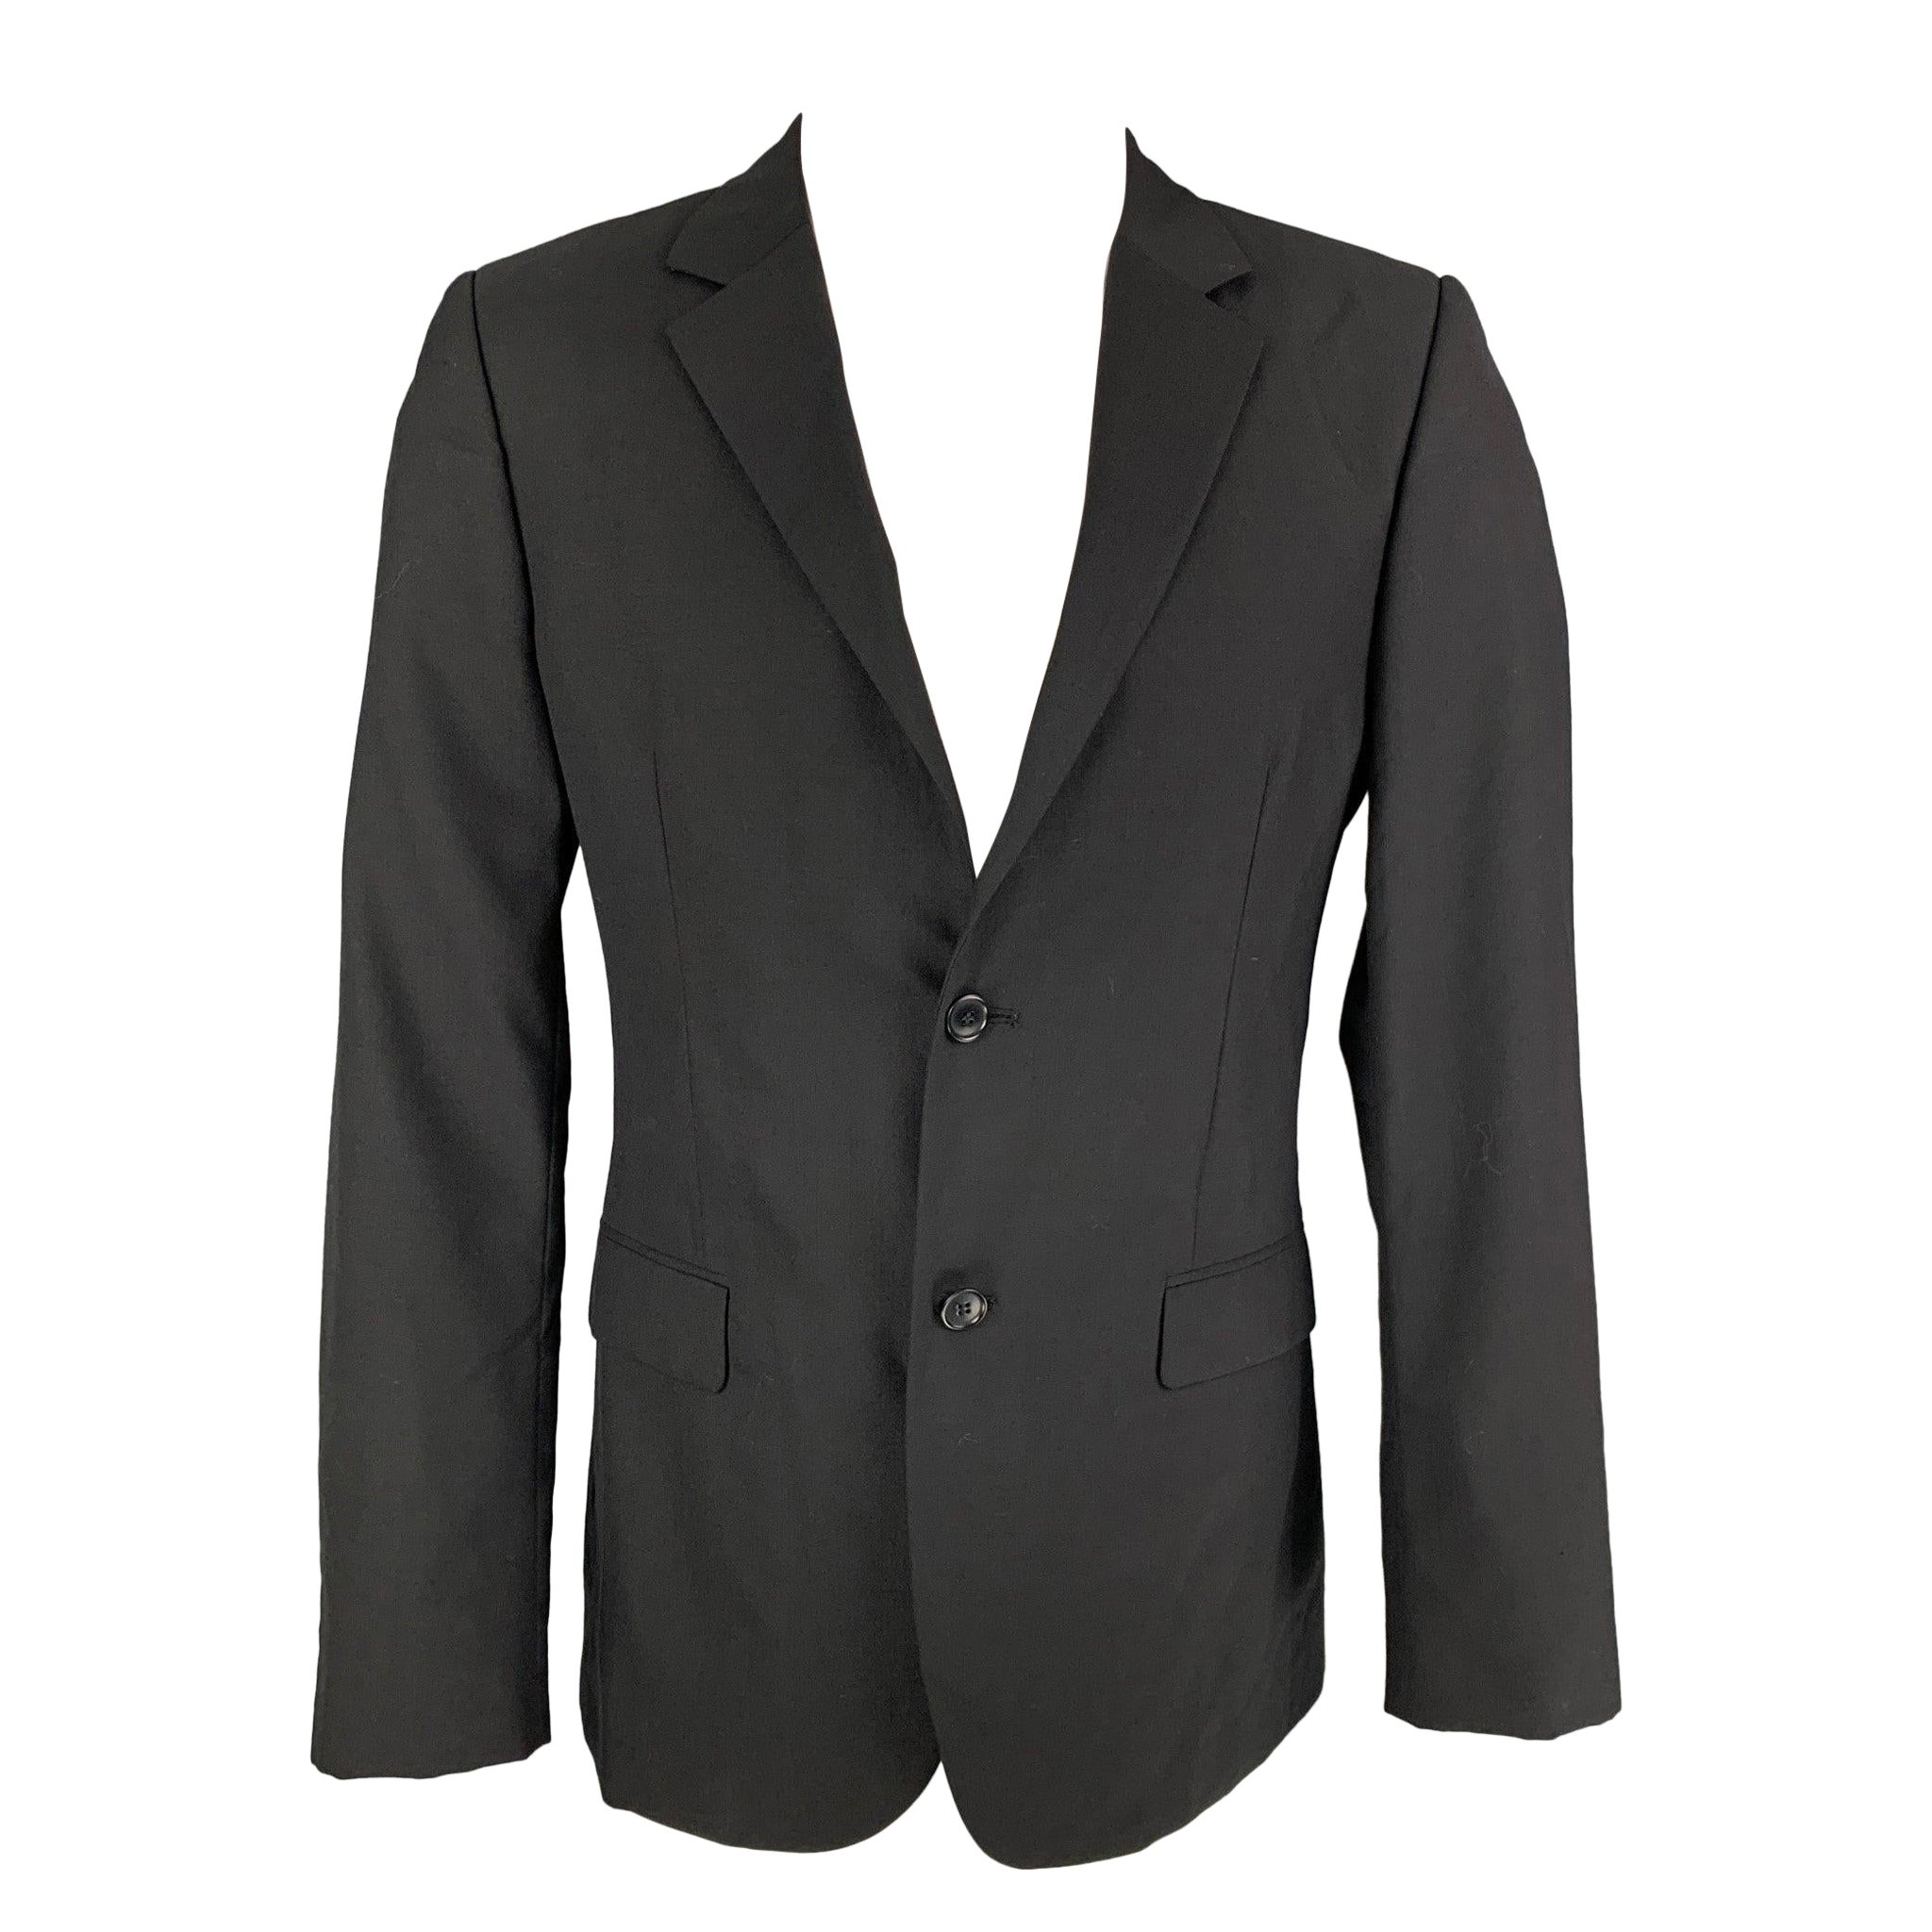 CALVIN KLEIN COLLECTION Size 38 Black Wool Notch Lapel Sport Coat For Sale